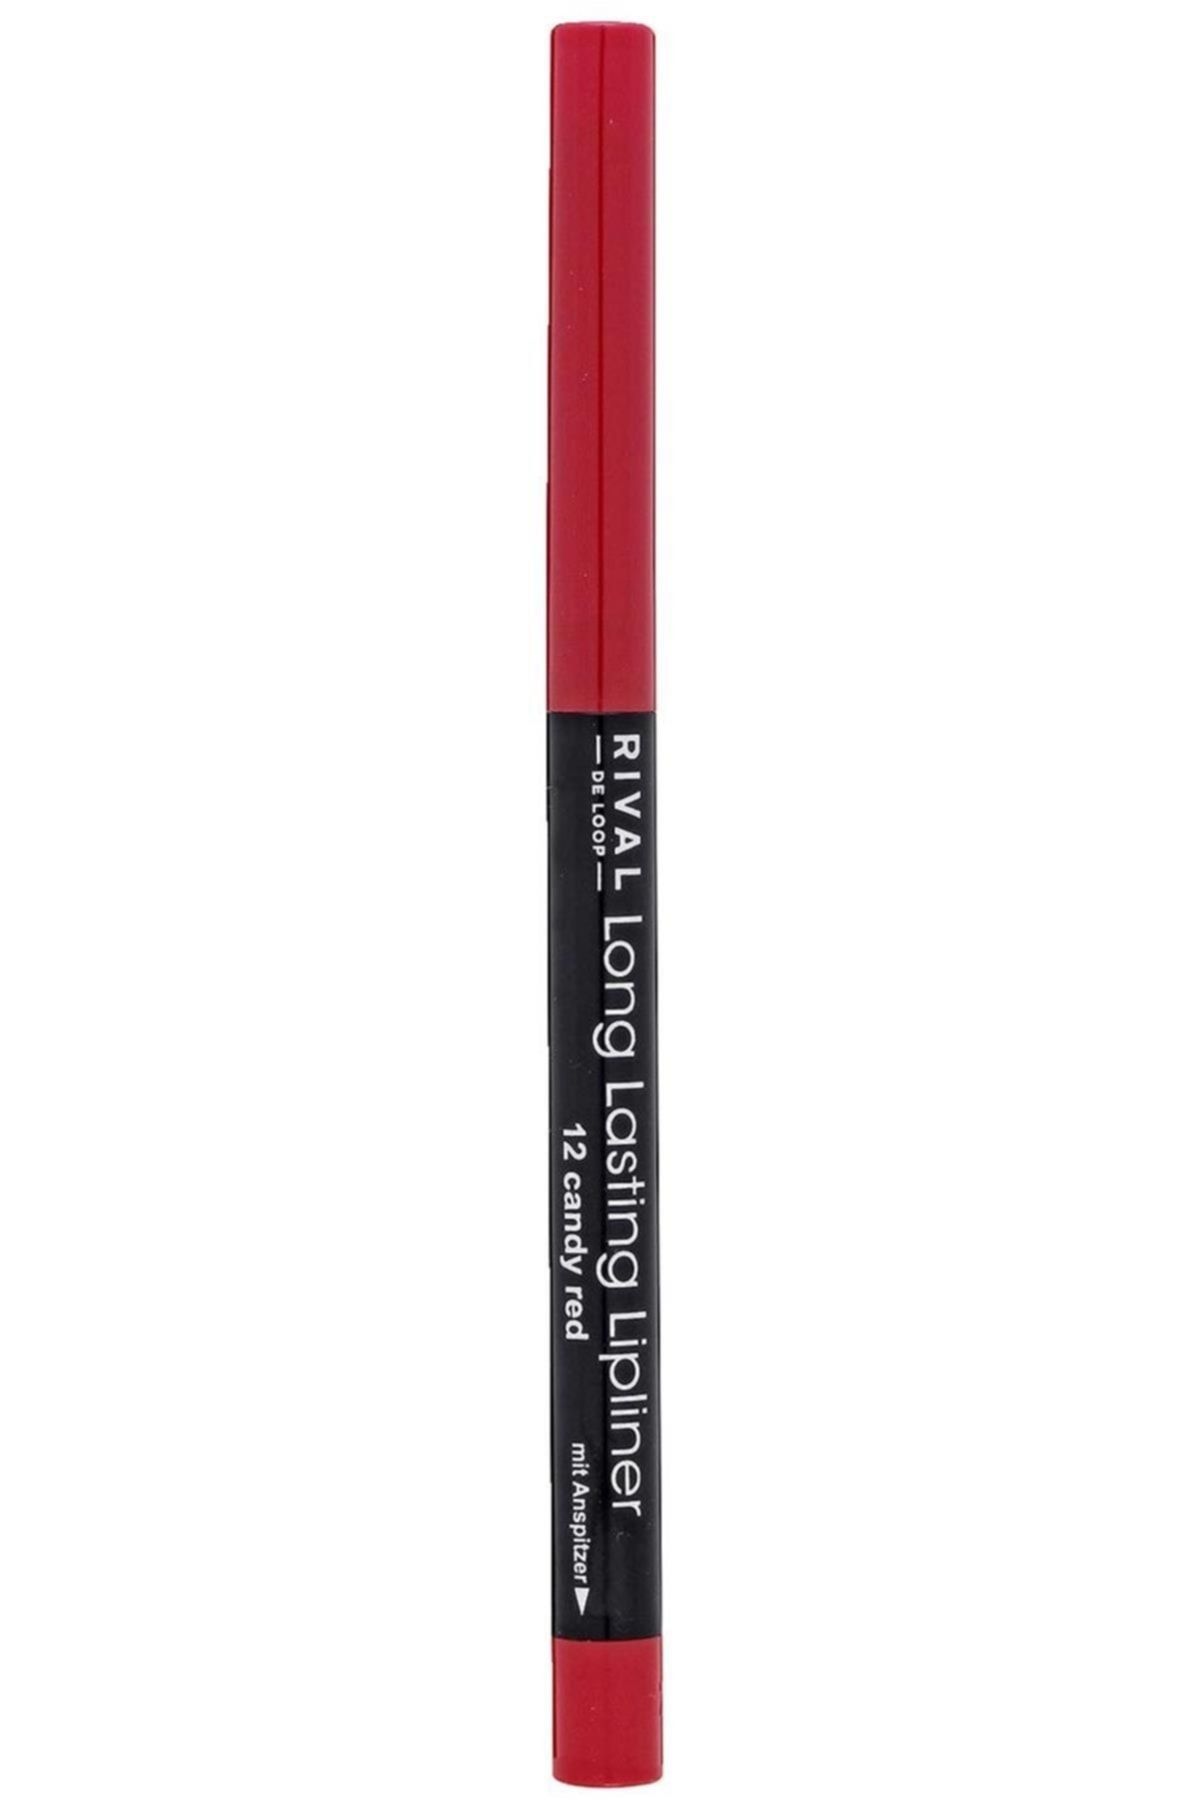 Rival De Loop Marka: Kalıcı Dudak Kalemi No:12 Candy Red Kategori: Dudak Kalemi